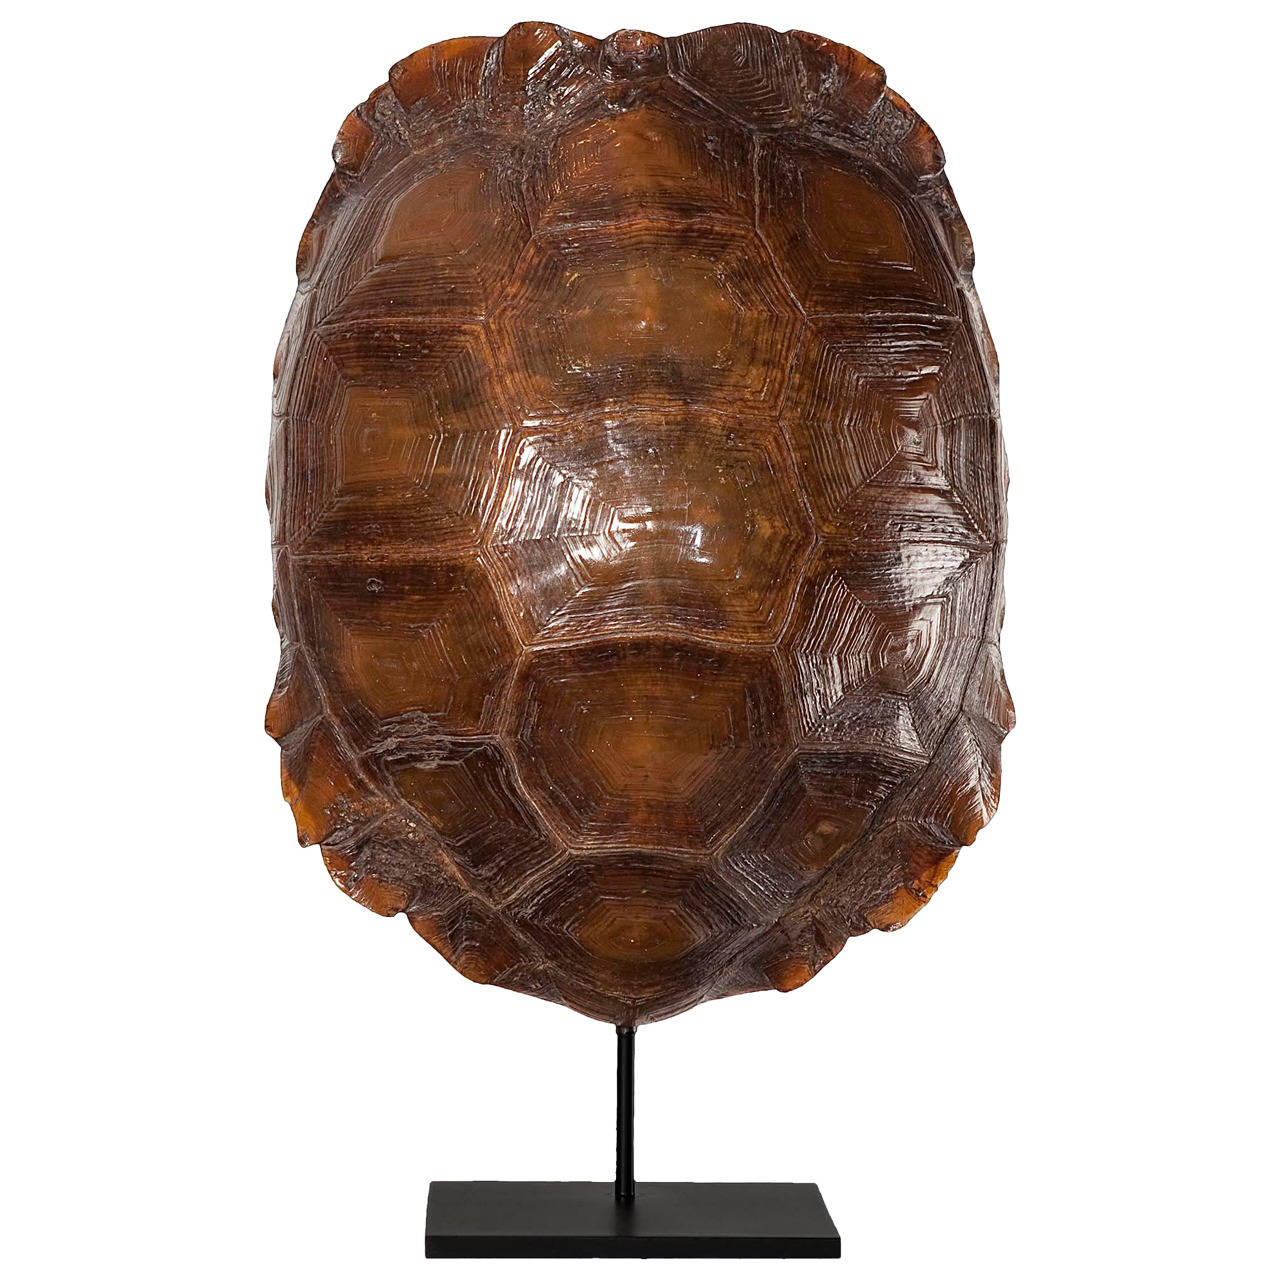 Tortoise shell. African spurred tortoise, Geochelone sulcata (Miller, 1779) For Sale